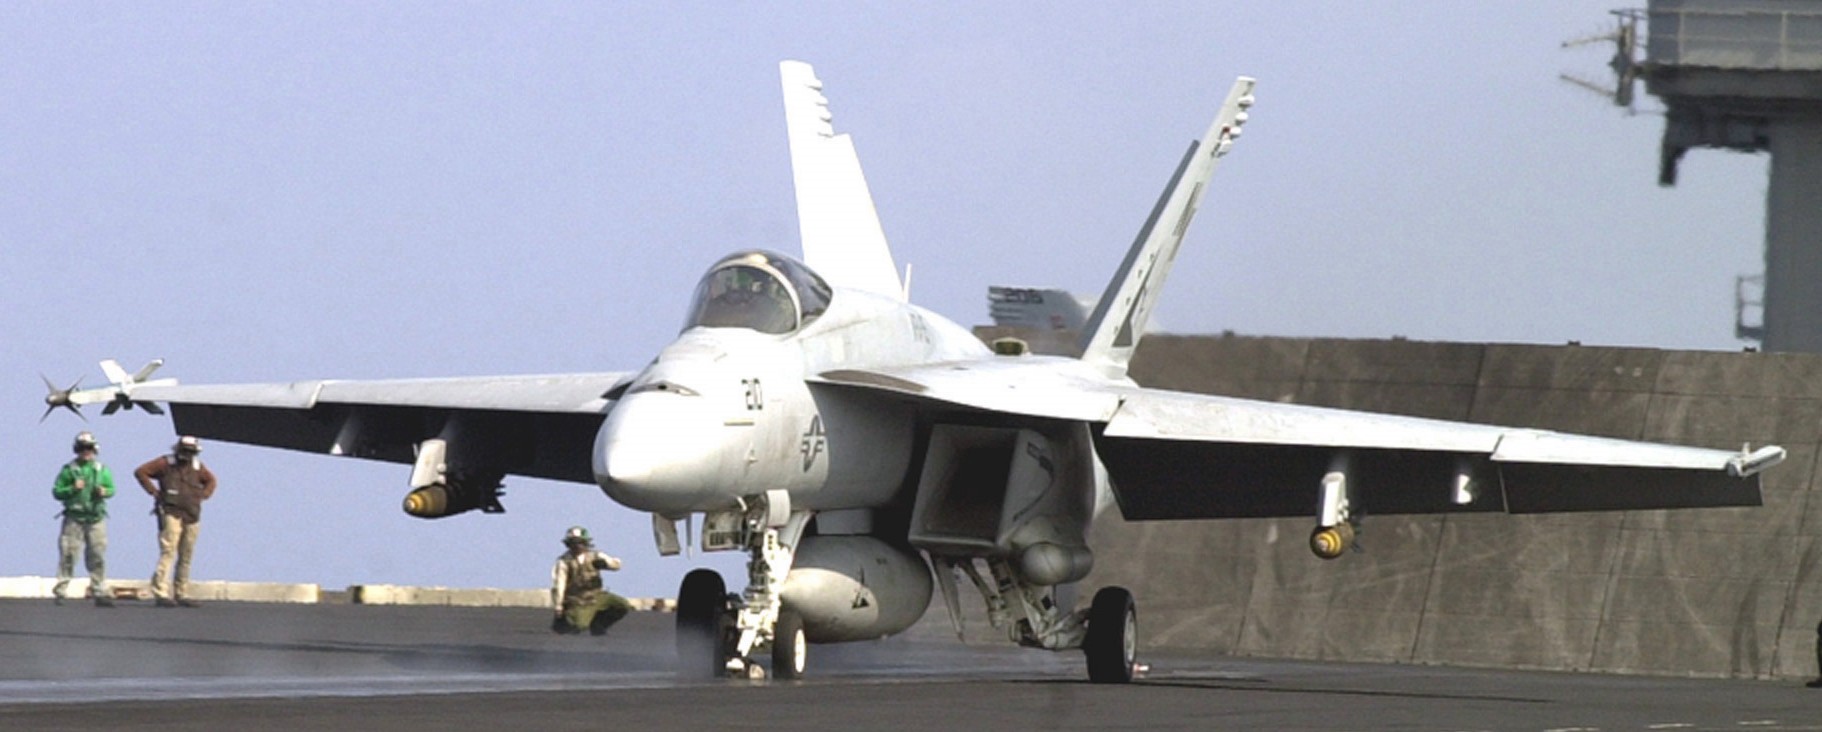 vfa-115 eagles strike fighter squadron f/a-18e super hornet cvw-14 uss abraham lincoln cvn-72 2002 70